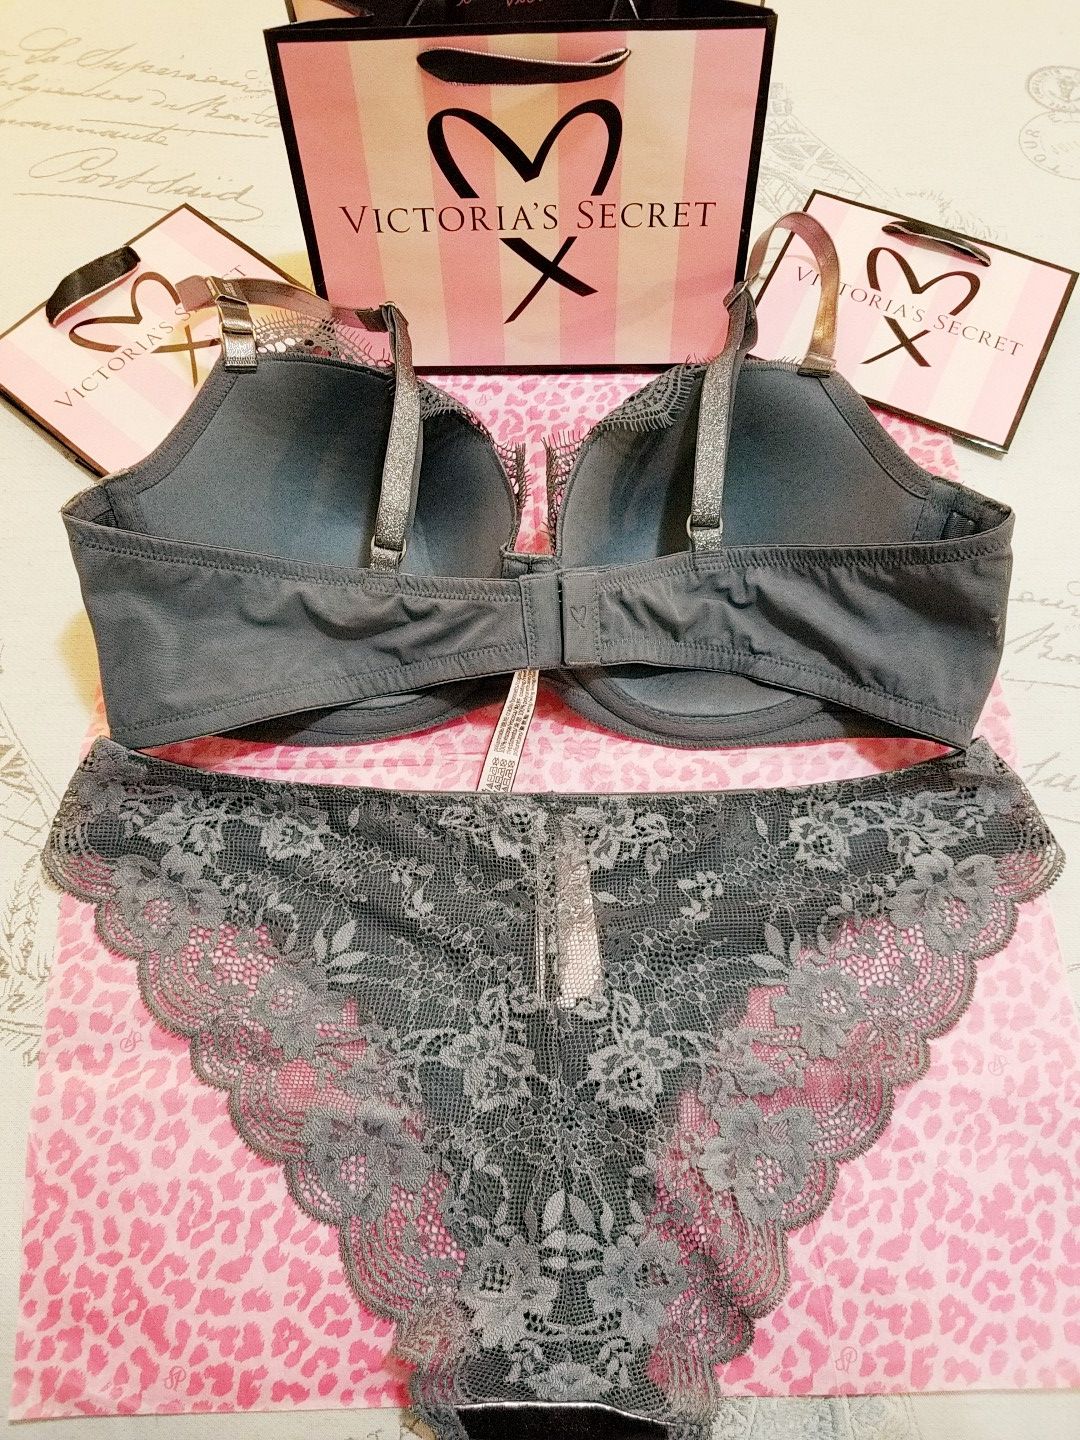 Victoria Secret Bras 38ddd for Sale in Long Beach, CA - OfferUp